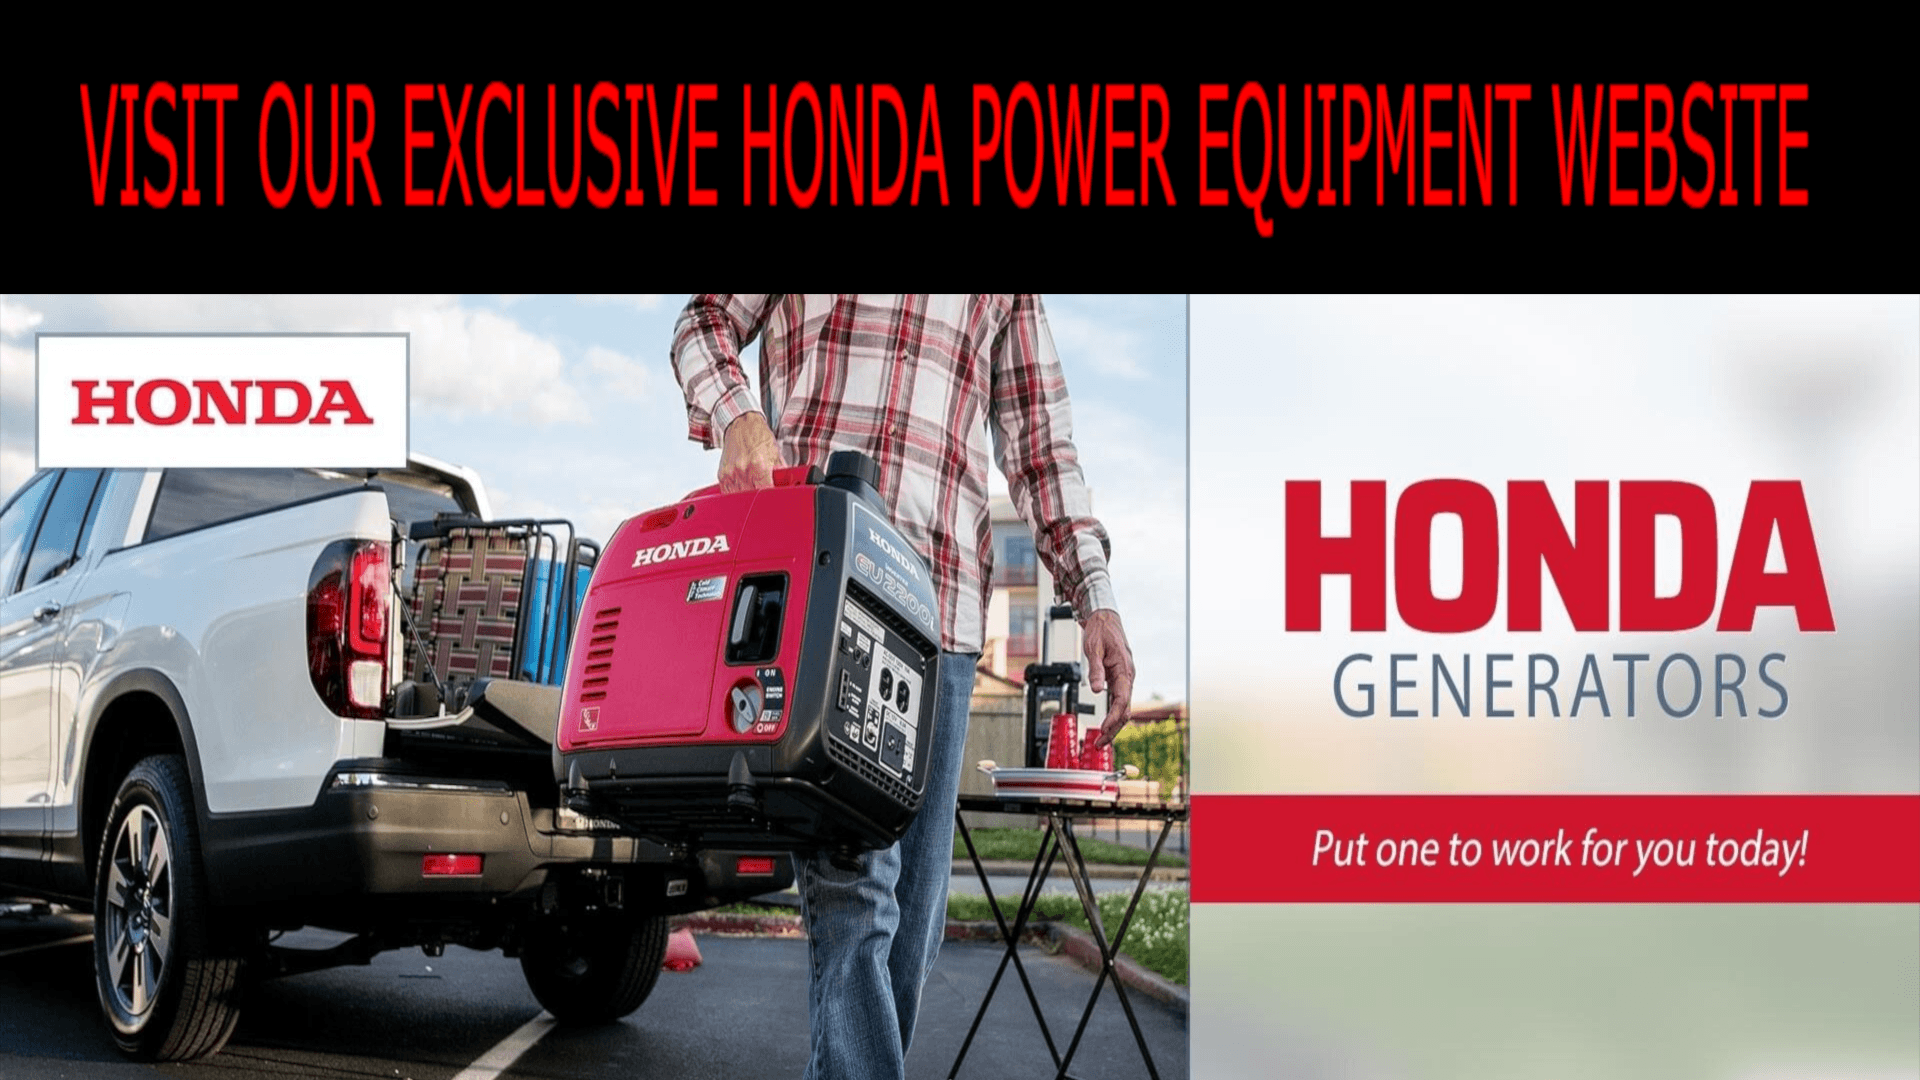 Visit Our Honda Power Equipment site